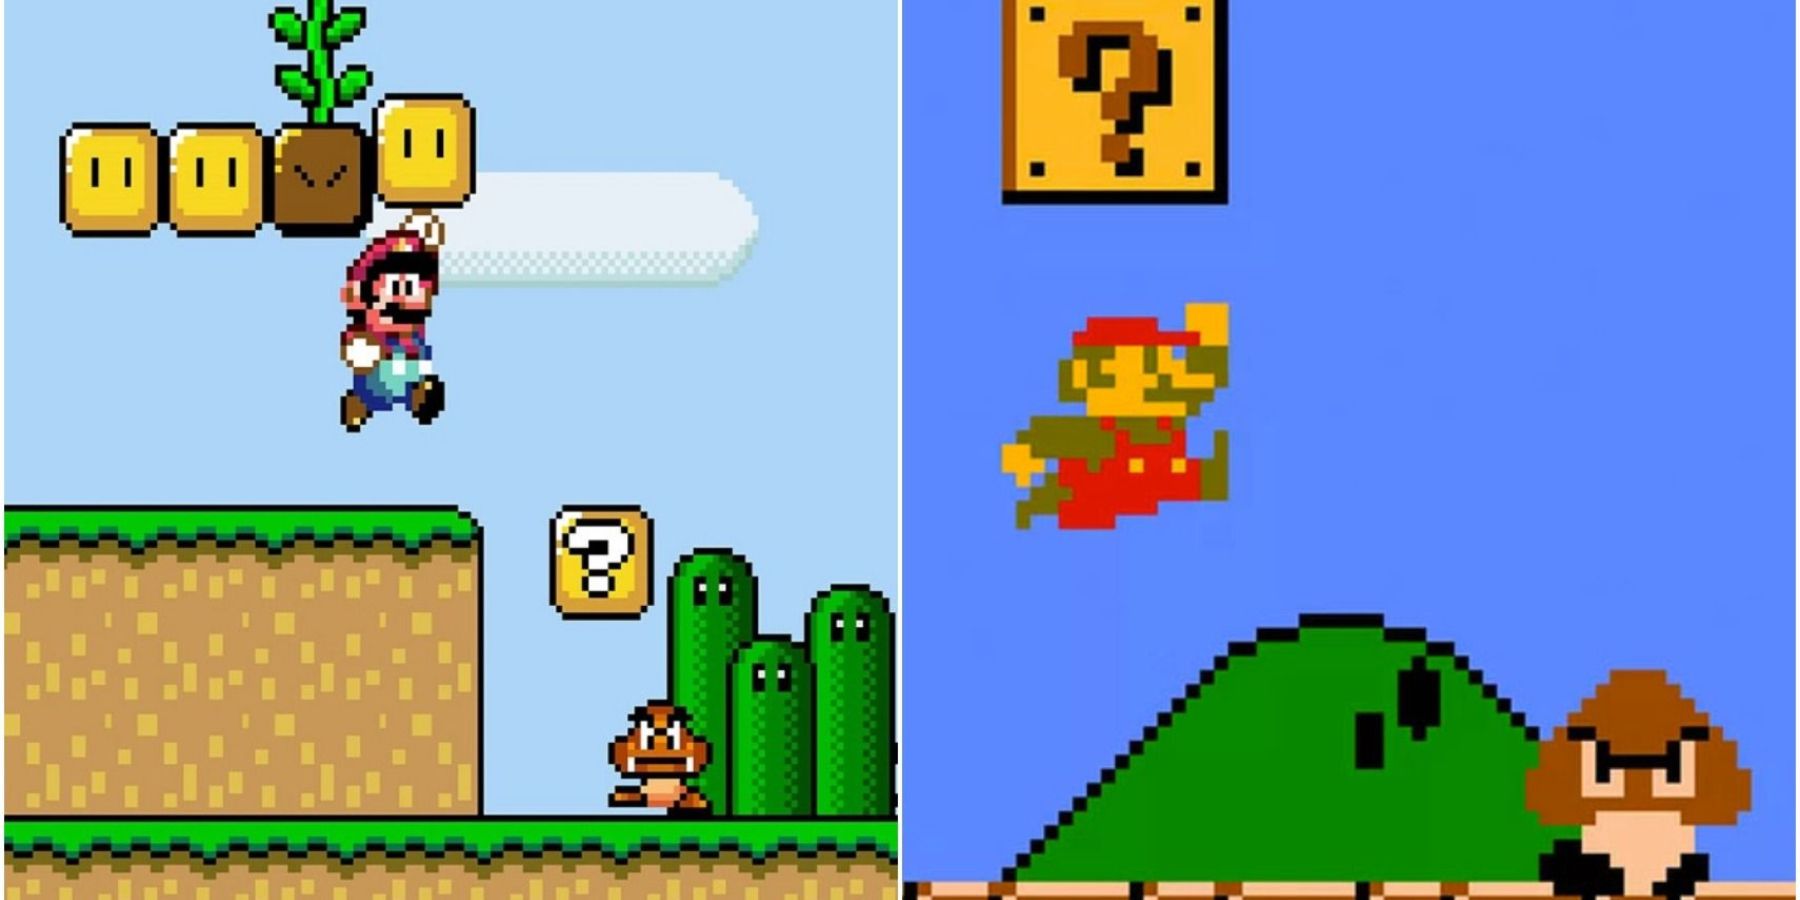 Super Mario Bros: Next Gen! Best 2D Mario Game 